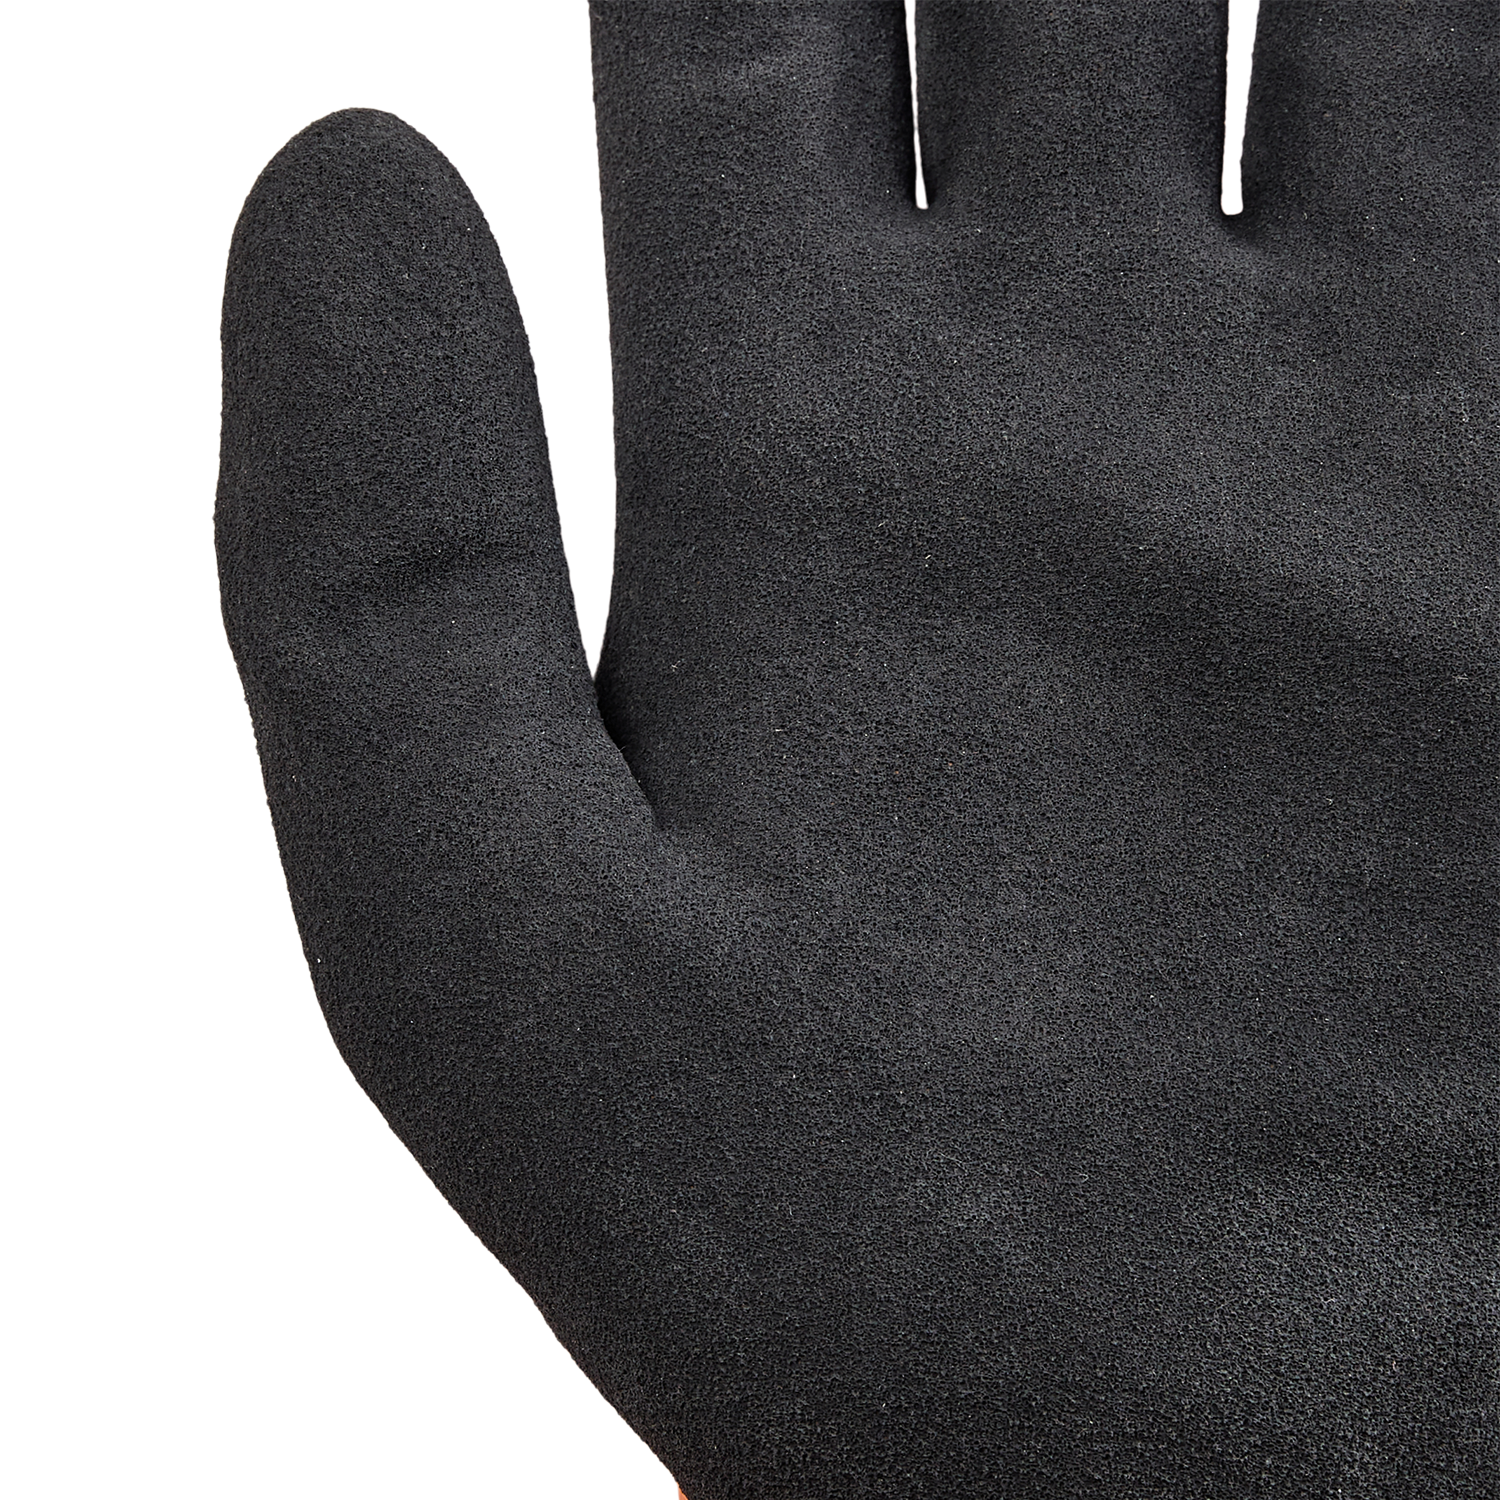 NORSE Arctic guantes de montaje de invierno impermeables talla 10